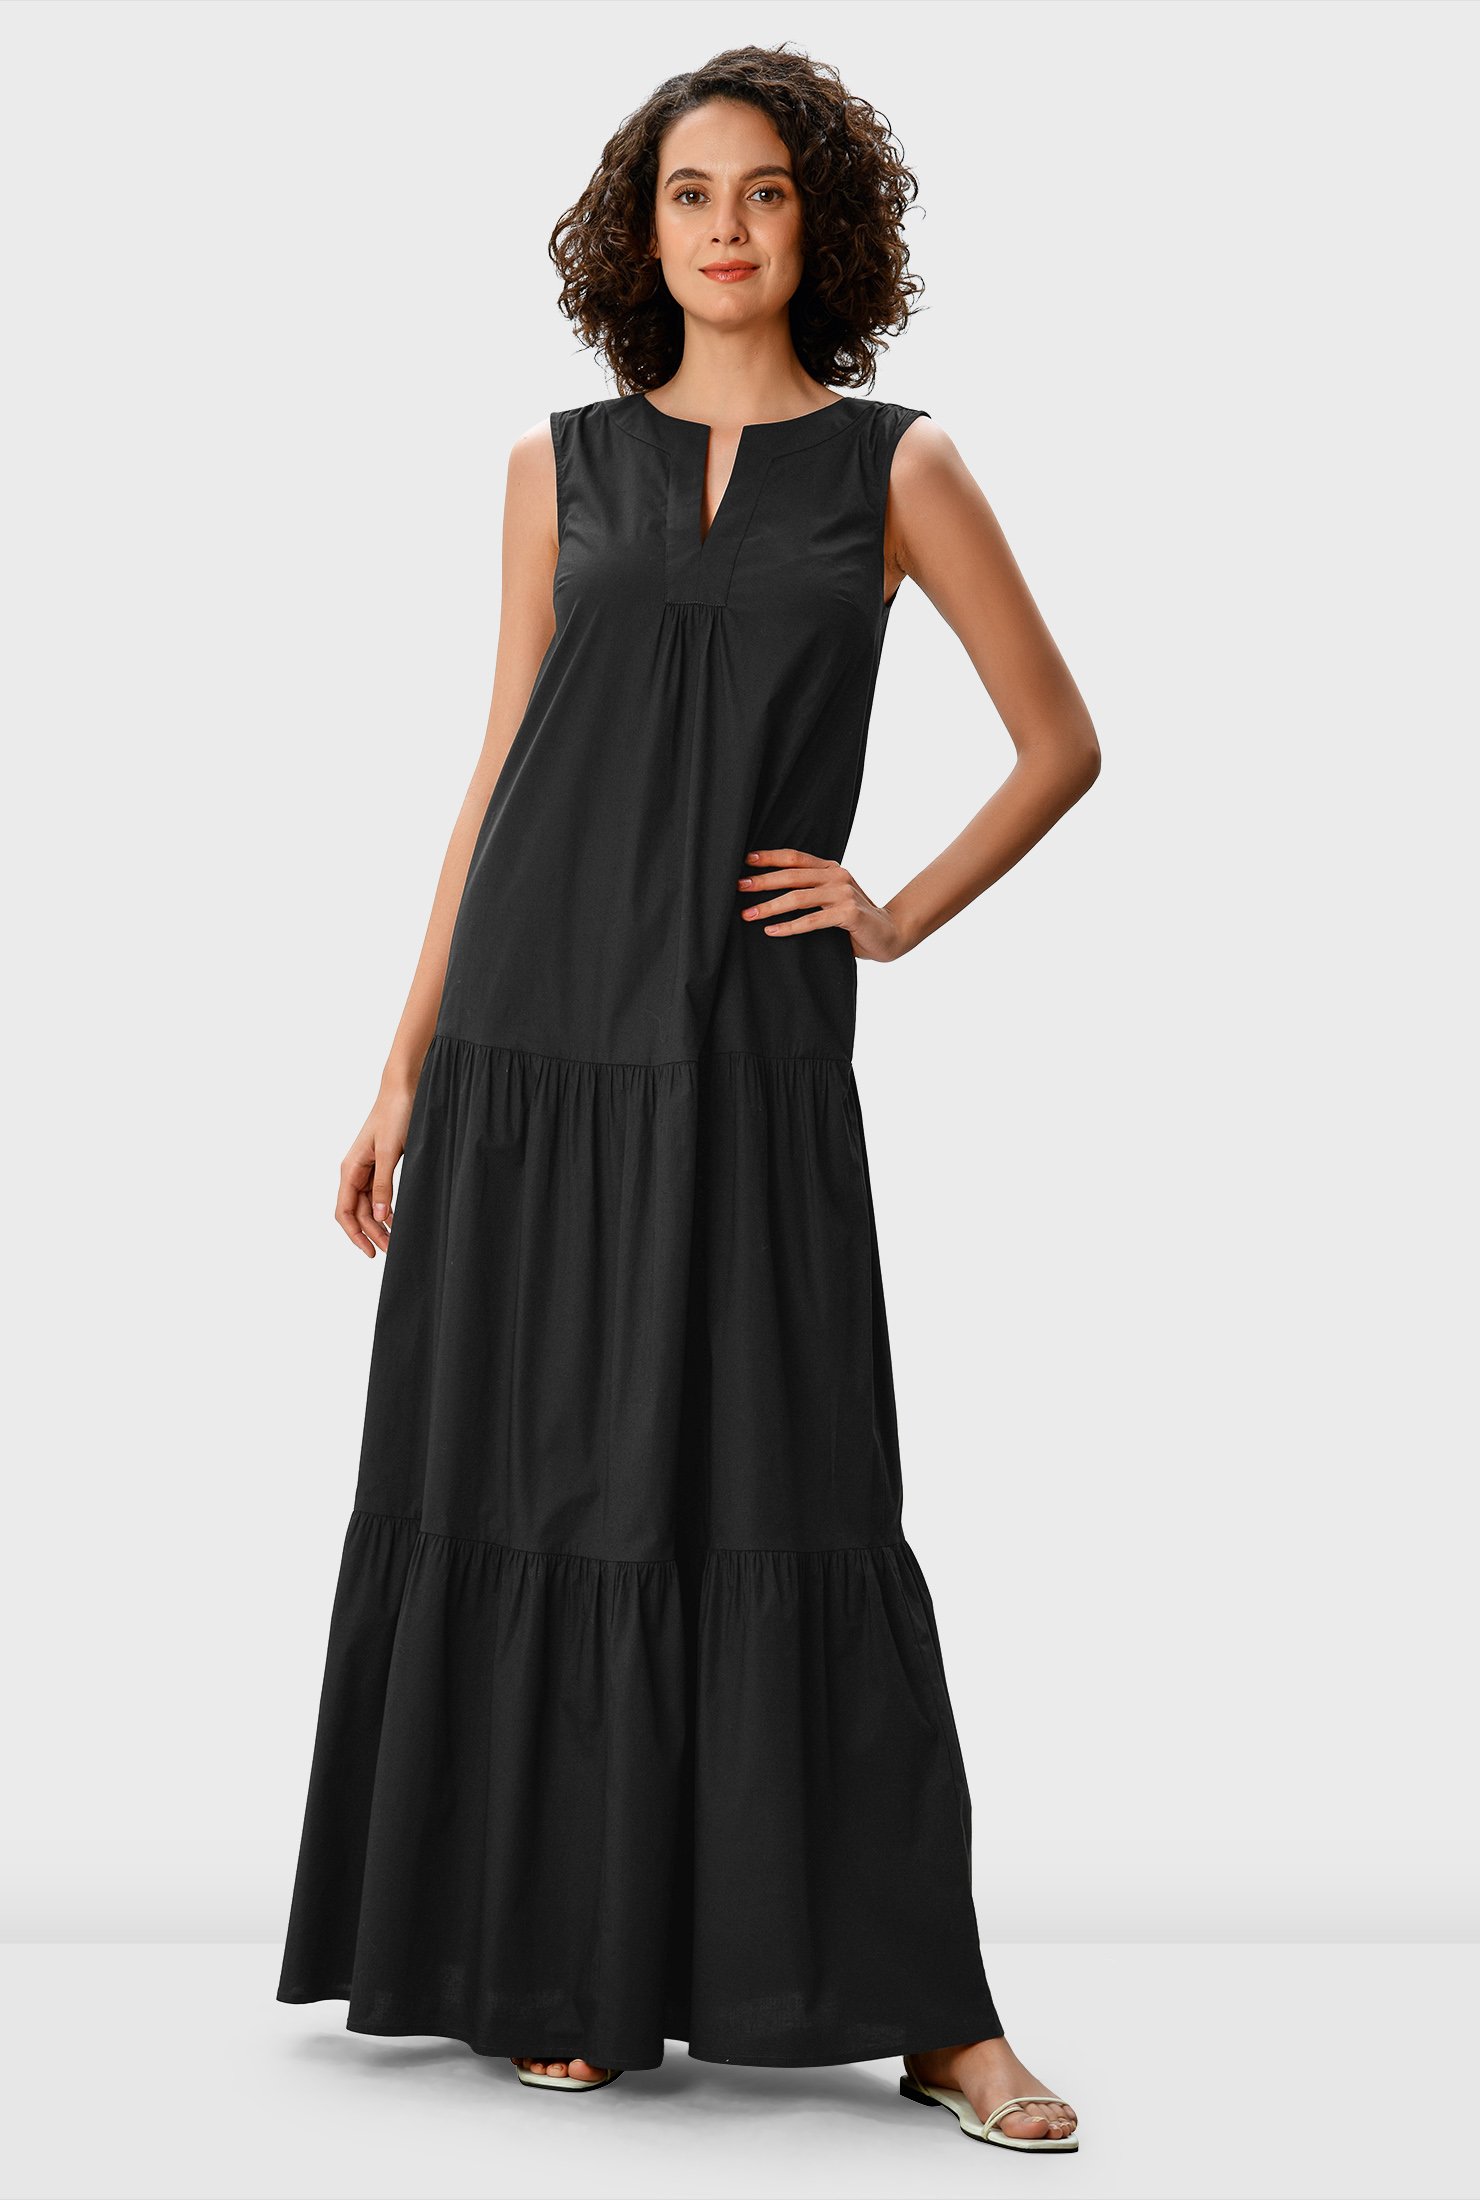 Quince Black Organic Cotton Tiered Maxi Dress sz M Women's Pockets Poplin  Fabric